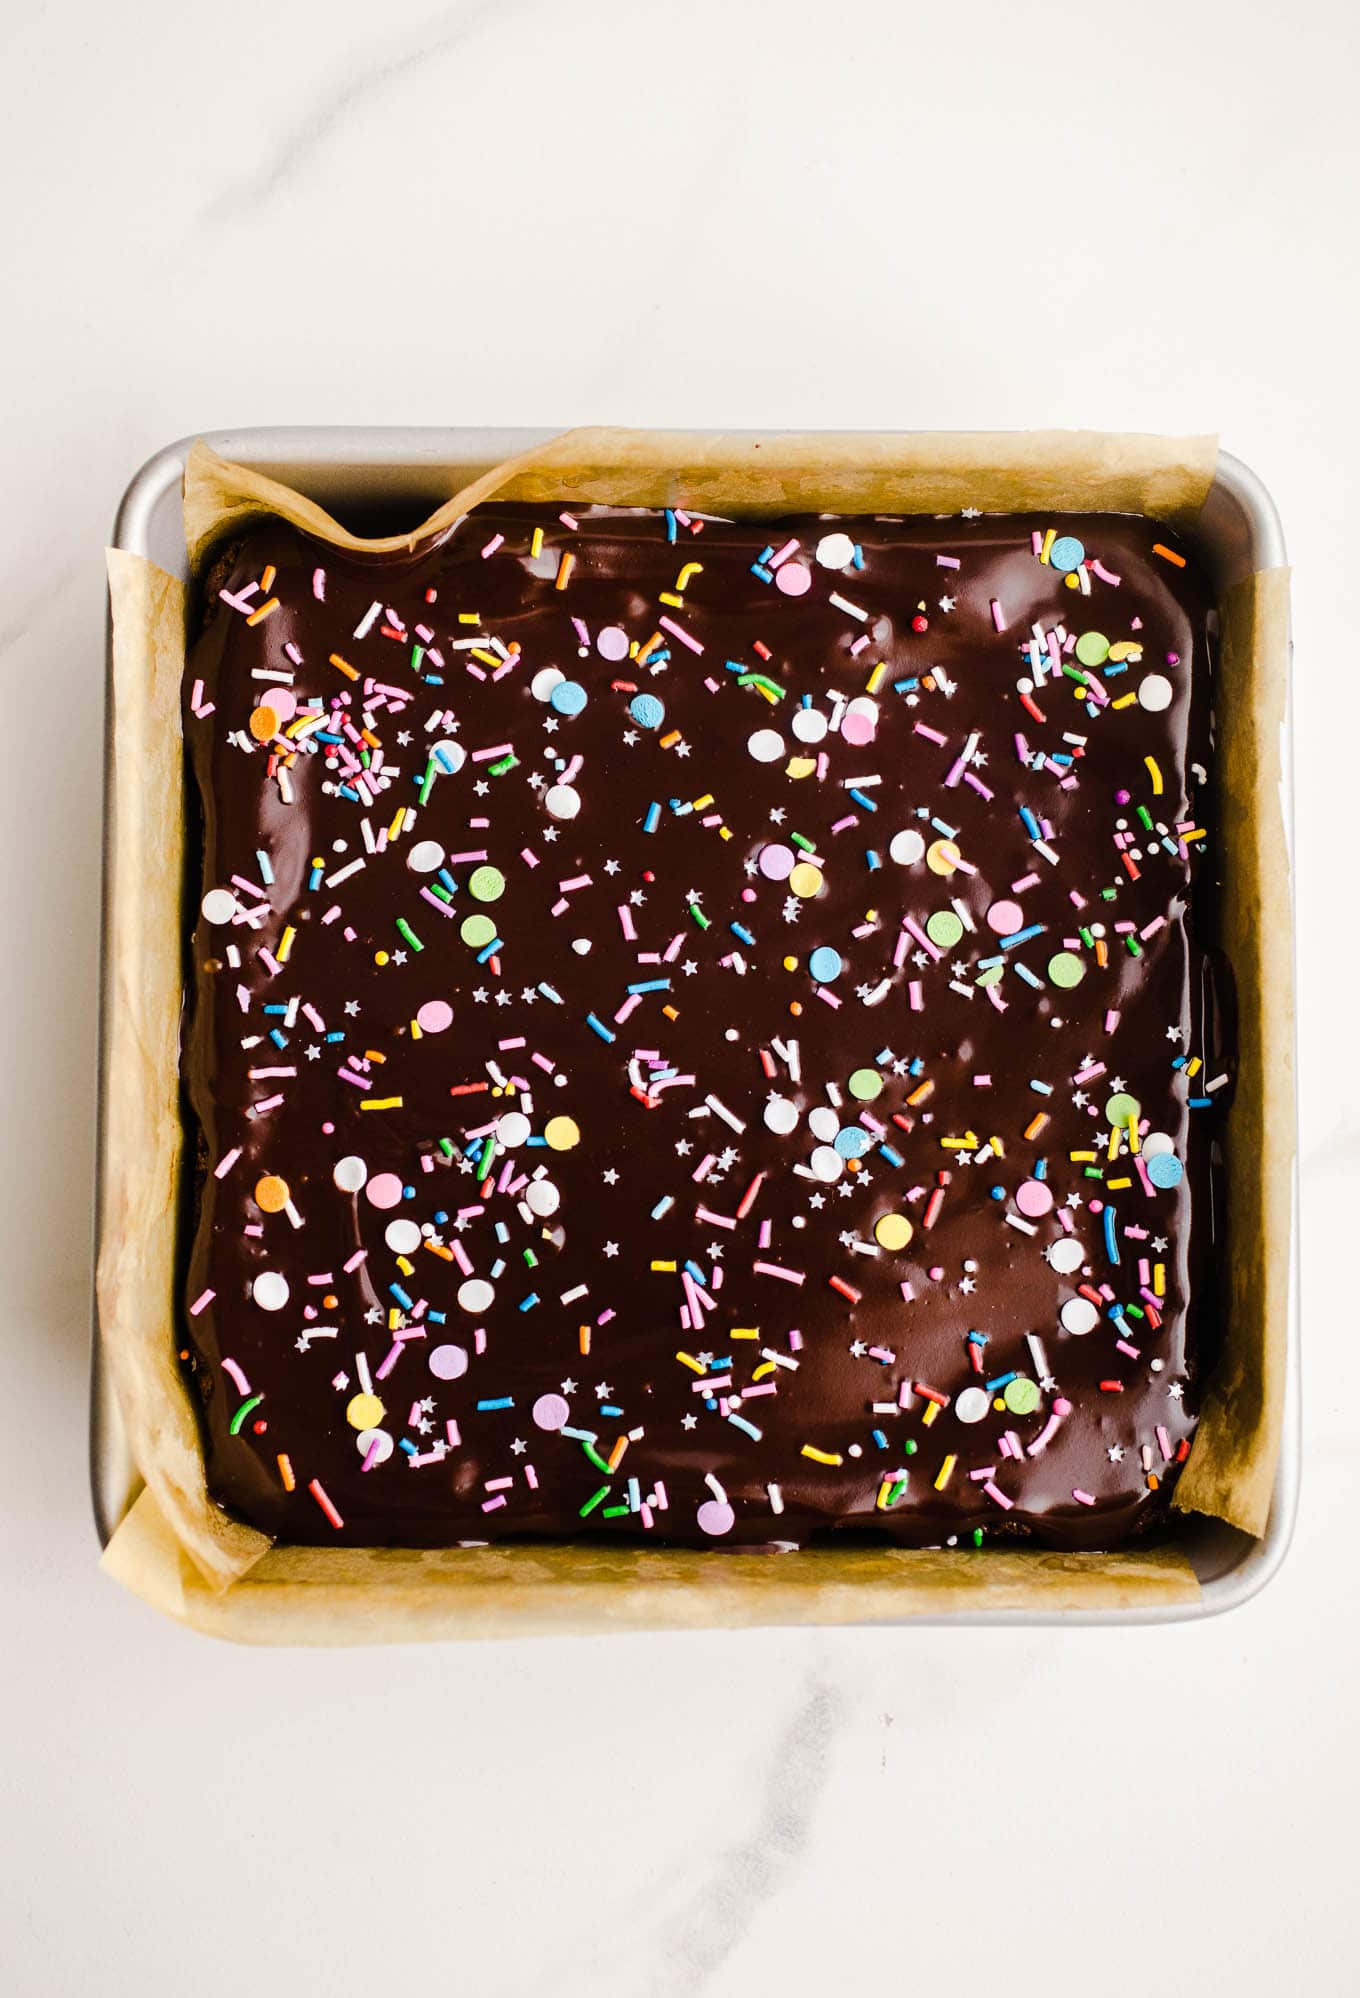 Hapini brownies me ganache çokollate dhe spërkatje